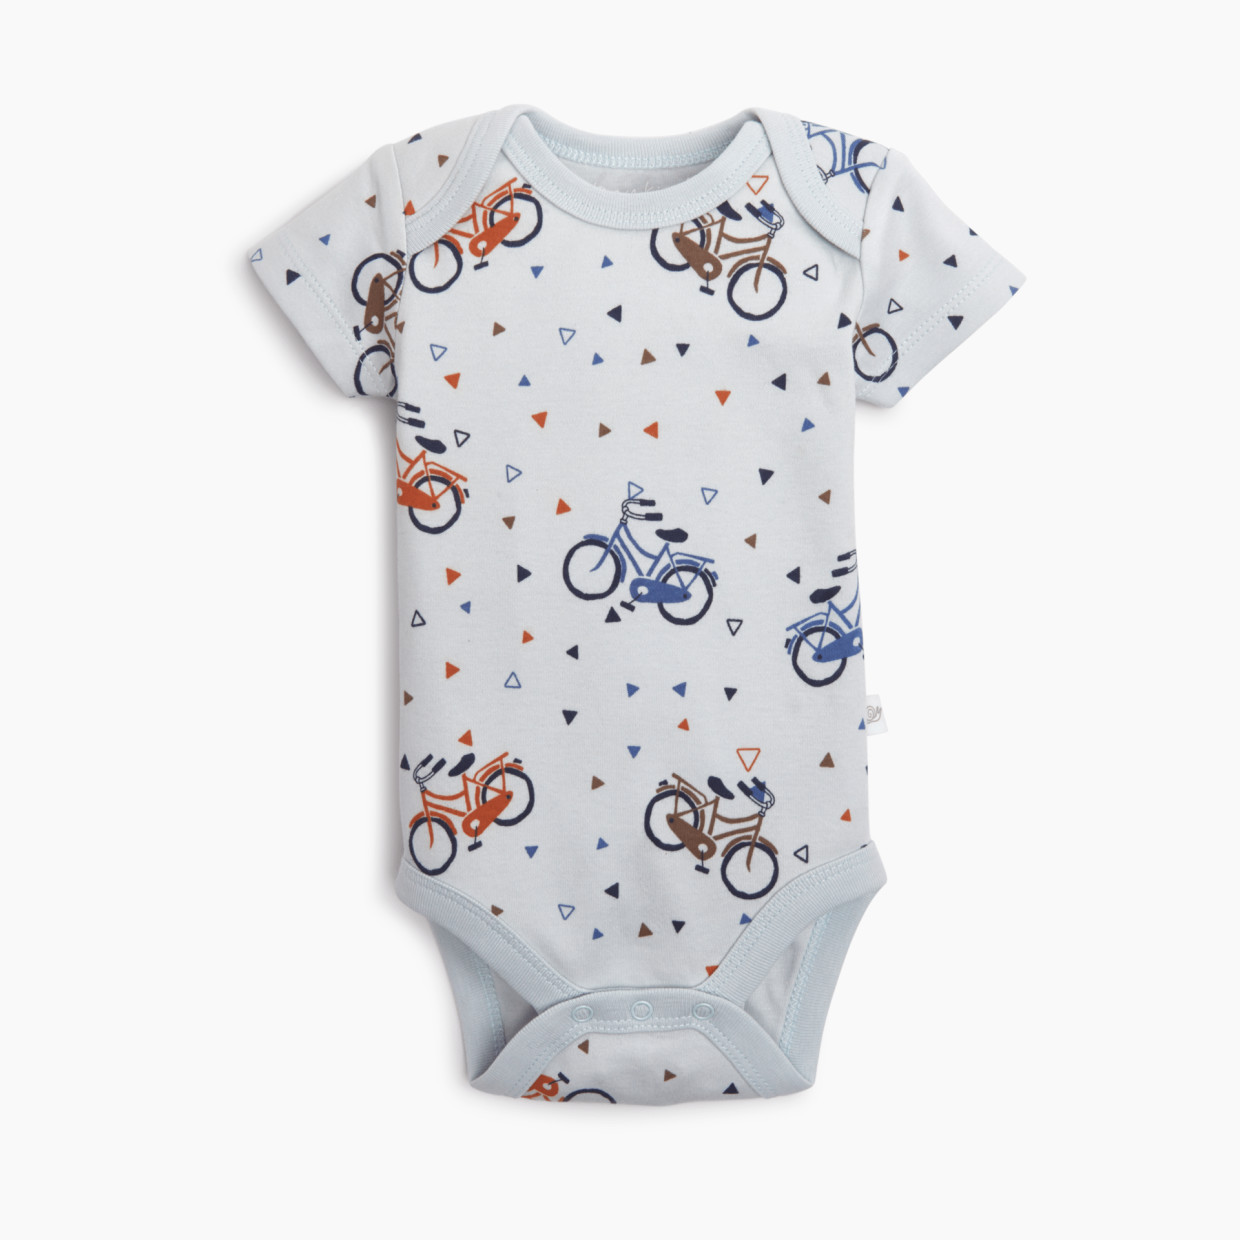 Tiny Kind Printed Short Sleeve Organic Cotton Bodysuit - Bicycle, 9-12 M.